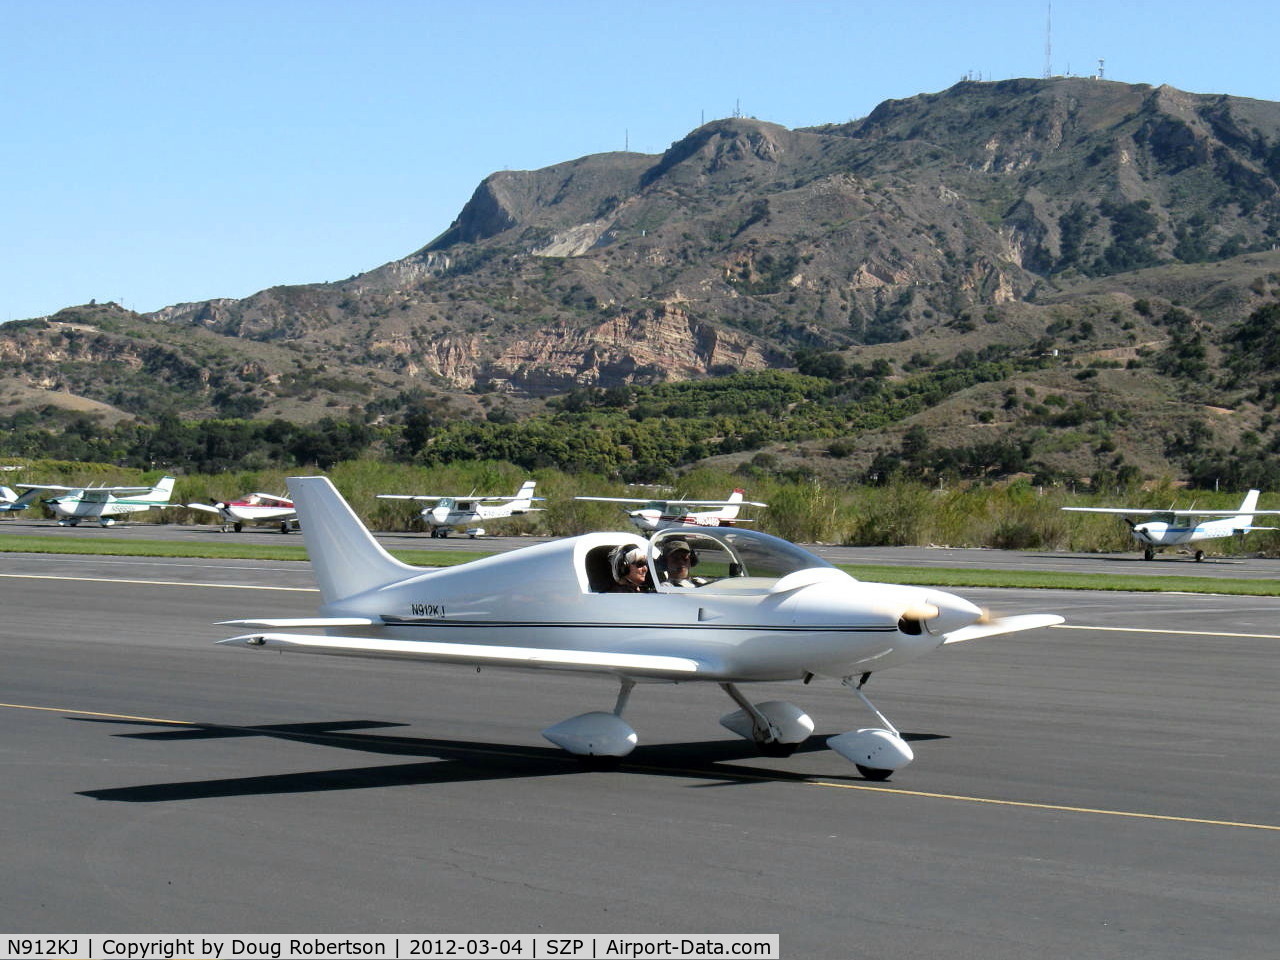 N912KJ, 2000 Aero Designs Pulsar XP912 C/N 349, 2000 Goodwin PULSAR 912XP, Rotax 912 100 Hp, taxi to Rwy 04